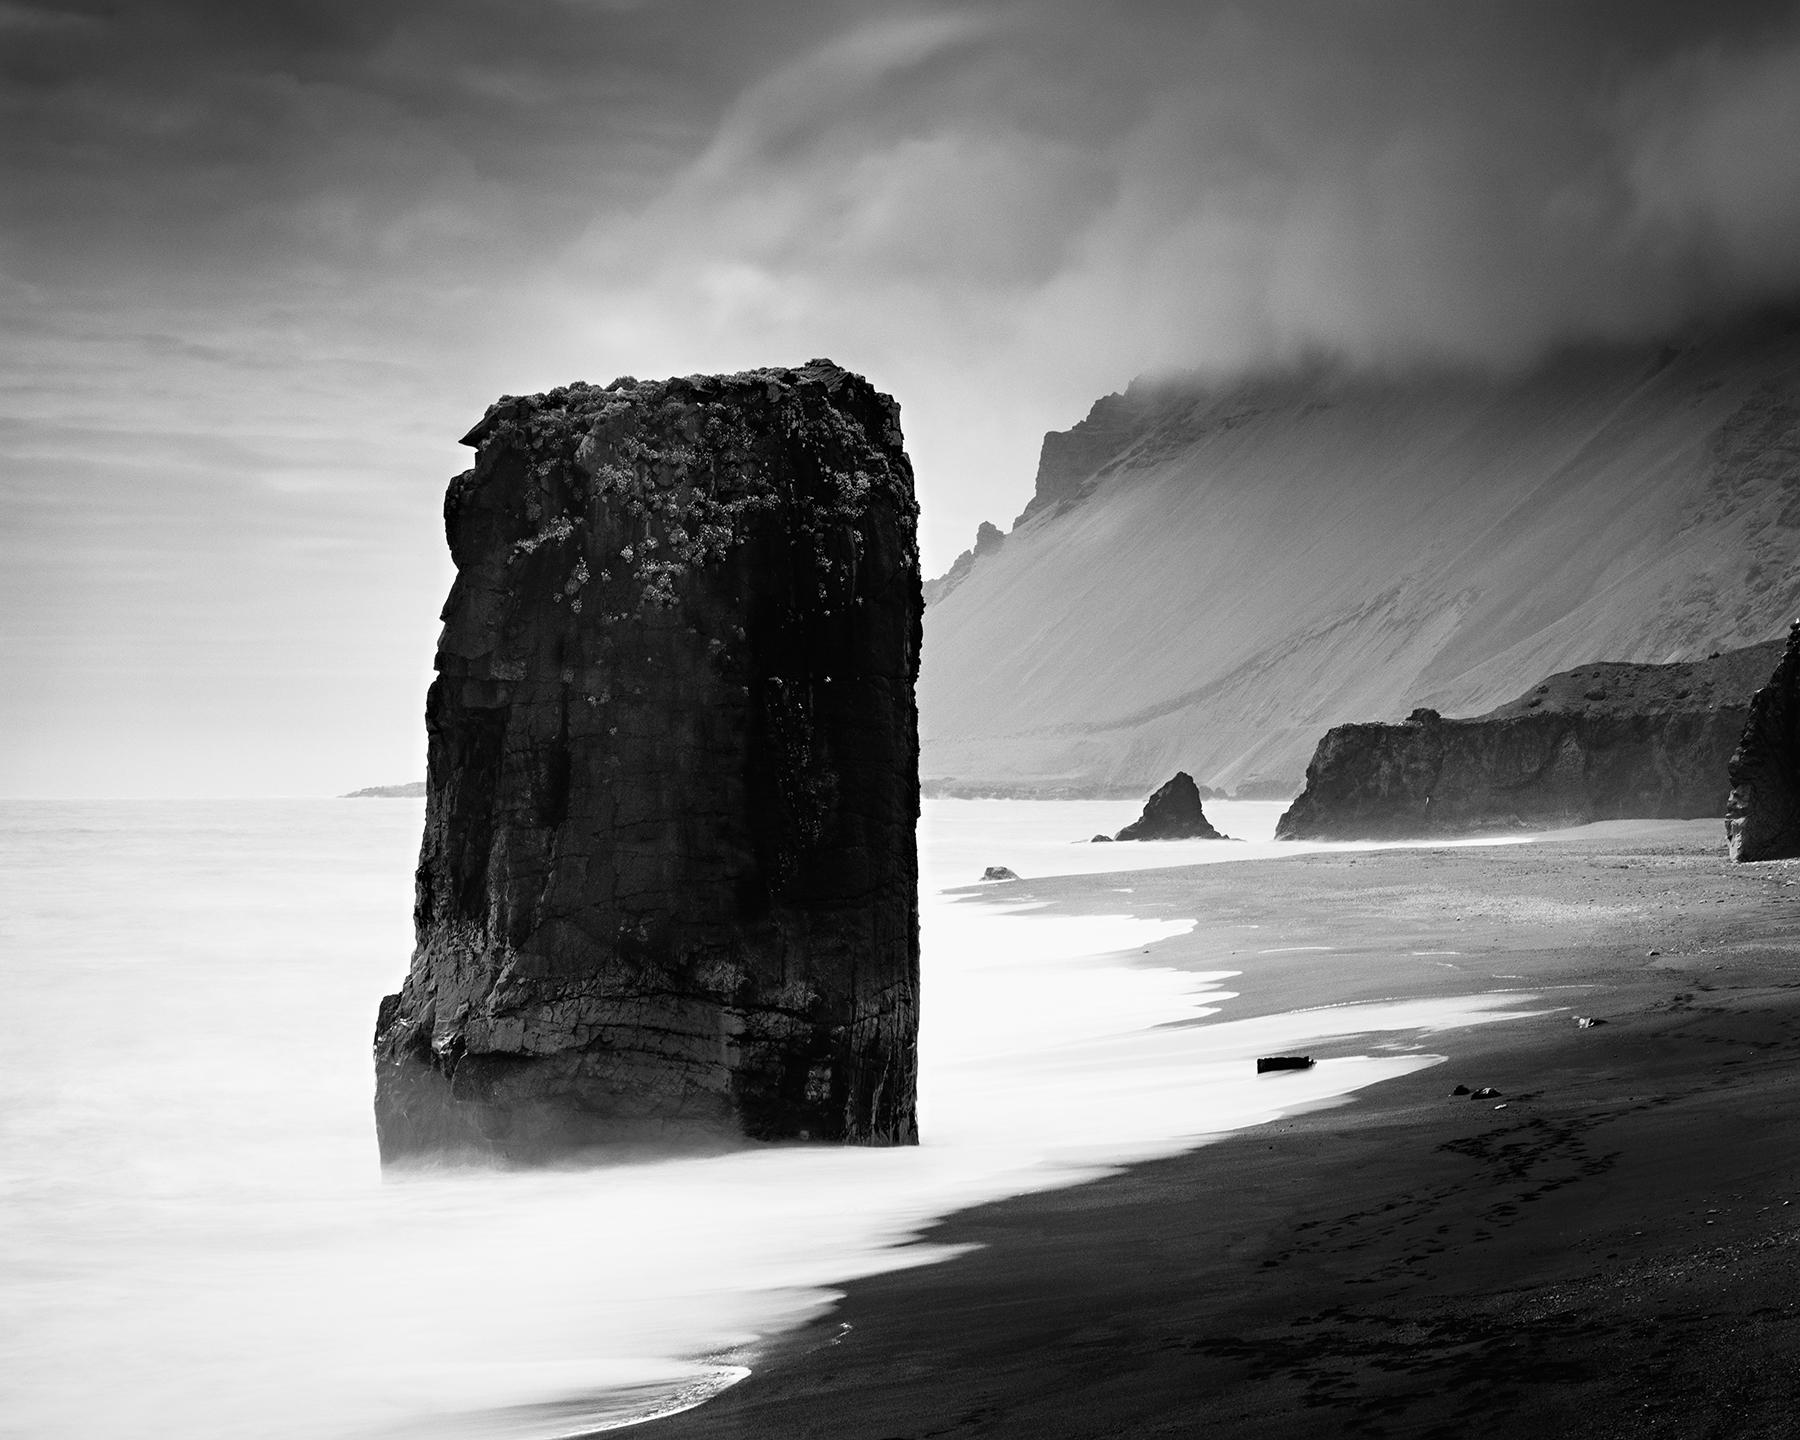 Flooded Rock, Black Beach, Iceland, black and white photography, landscape, art